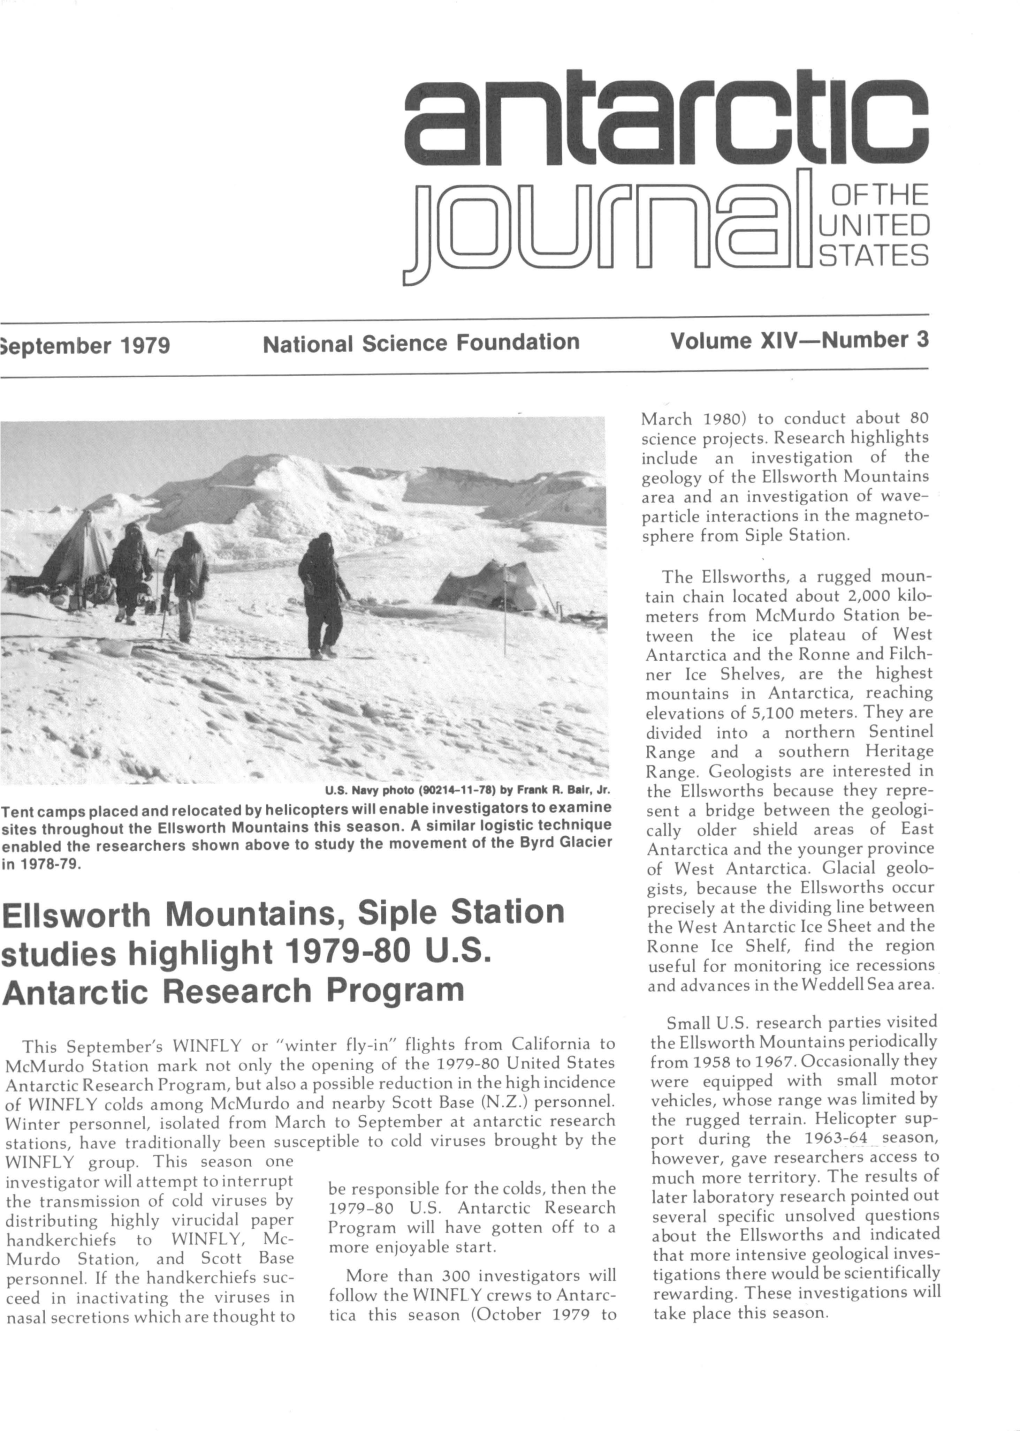 Ellsworth Mountains, Siple Station Studies Highlight 1 -- U.S. Antarctic